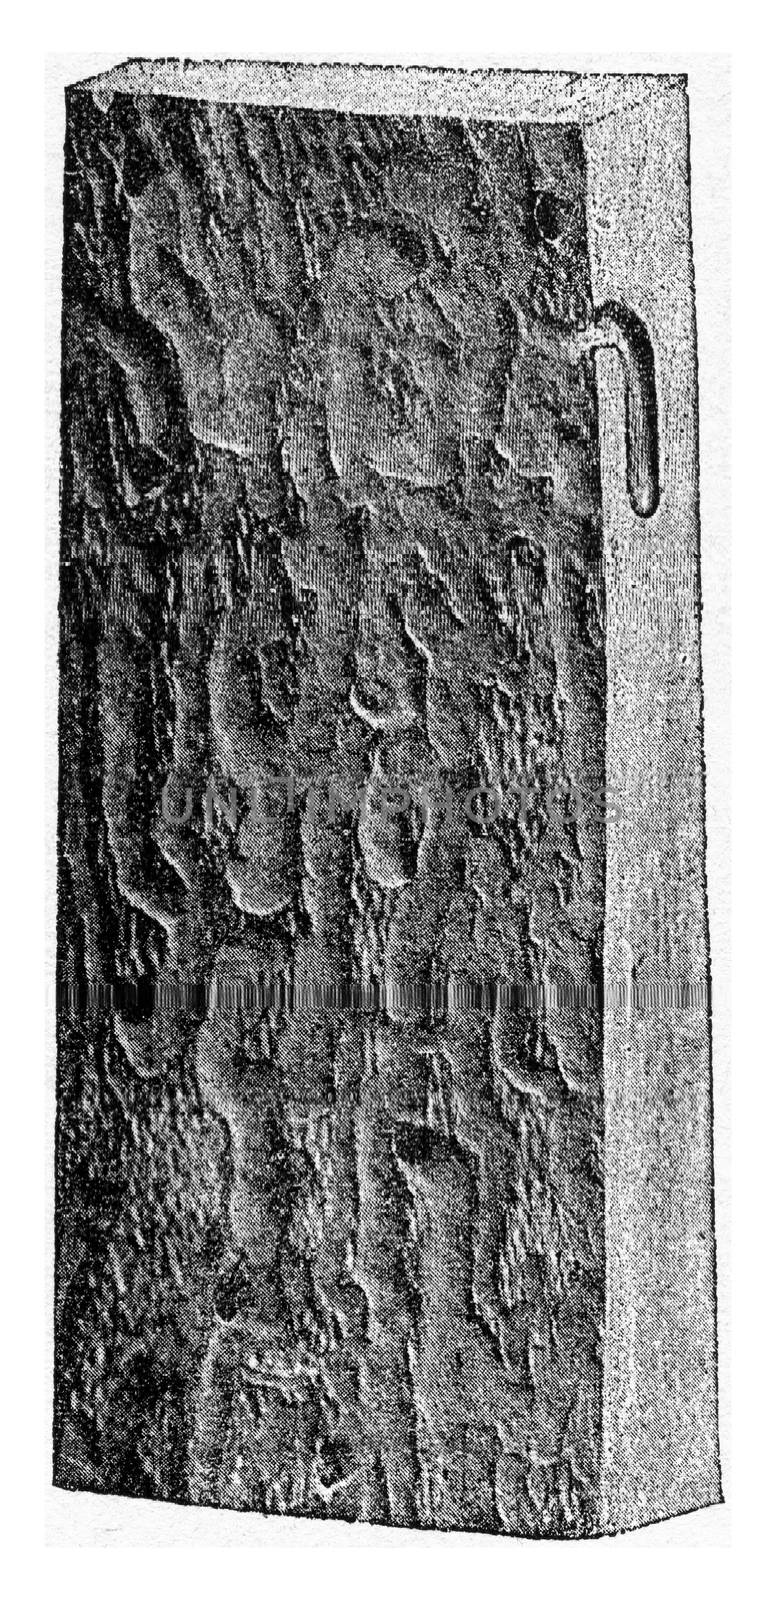 Alteration produced by Callidium variabile on oak, vintage engra by Morphart